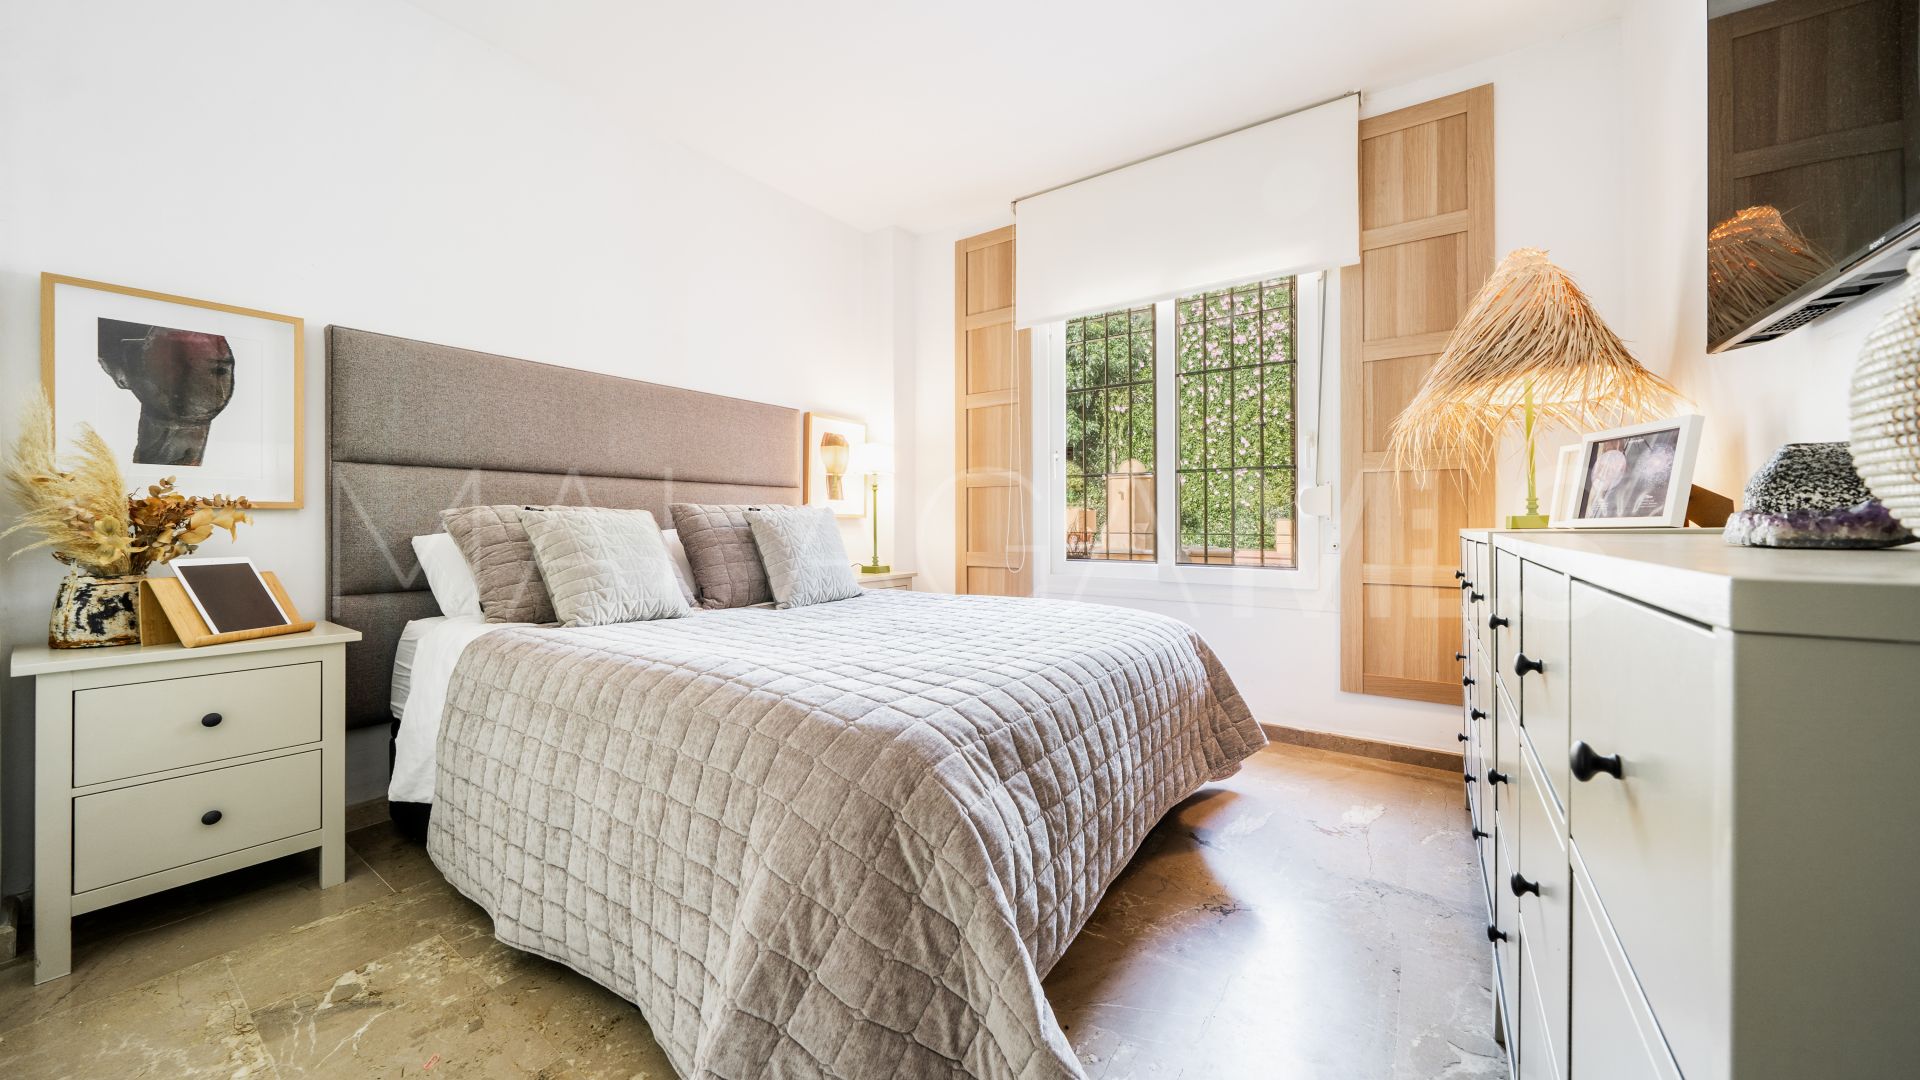 3 bedrooms Nueva Andalucia ground floor apartment for sale